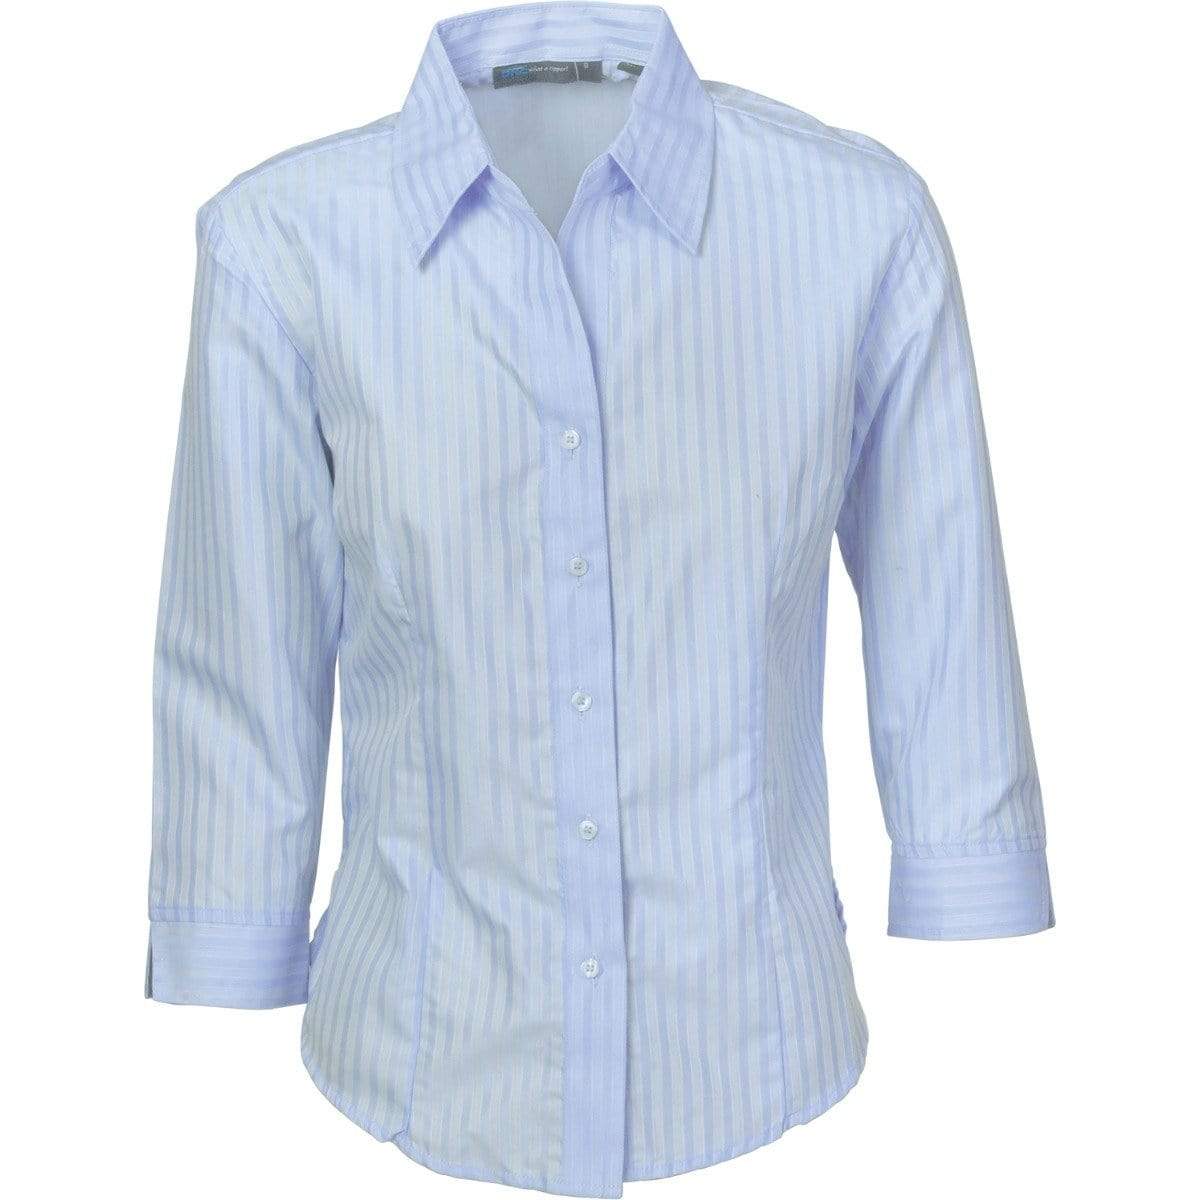 Dnc Workwear Ladies Tonal Stripe 3/4 Sleeve Shirt - 4236 Corporate Wear DNC Workwear Light Blue 6 